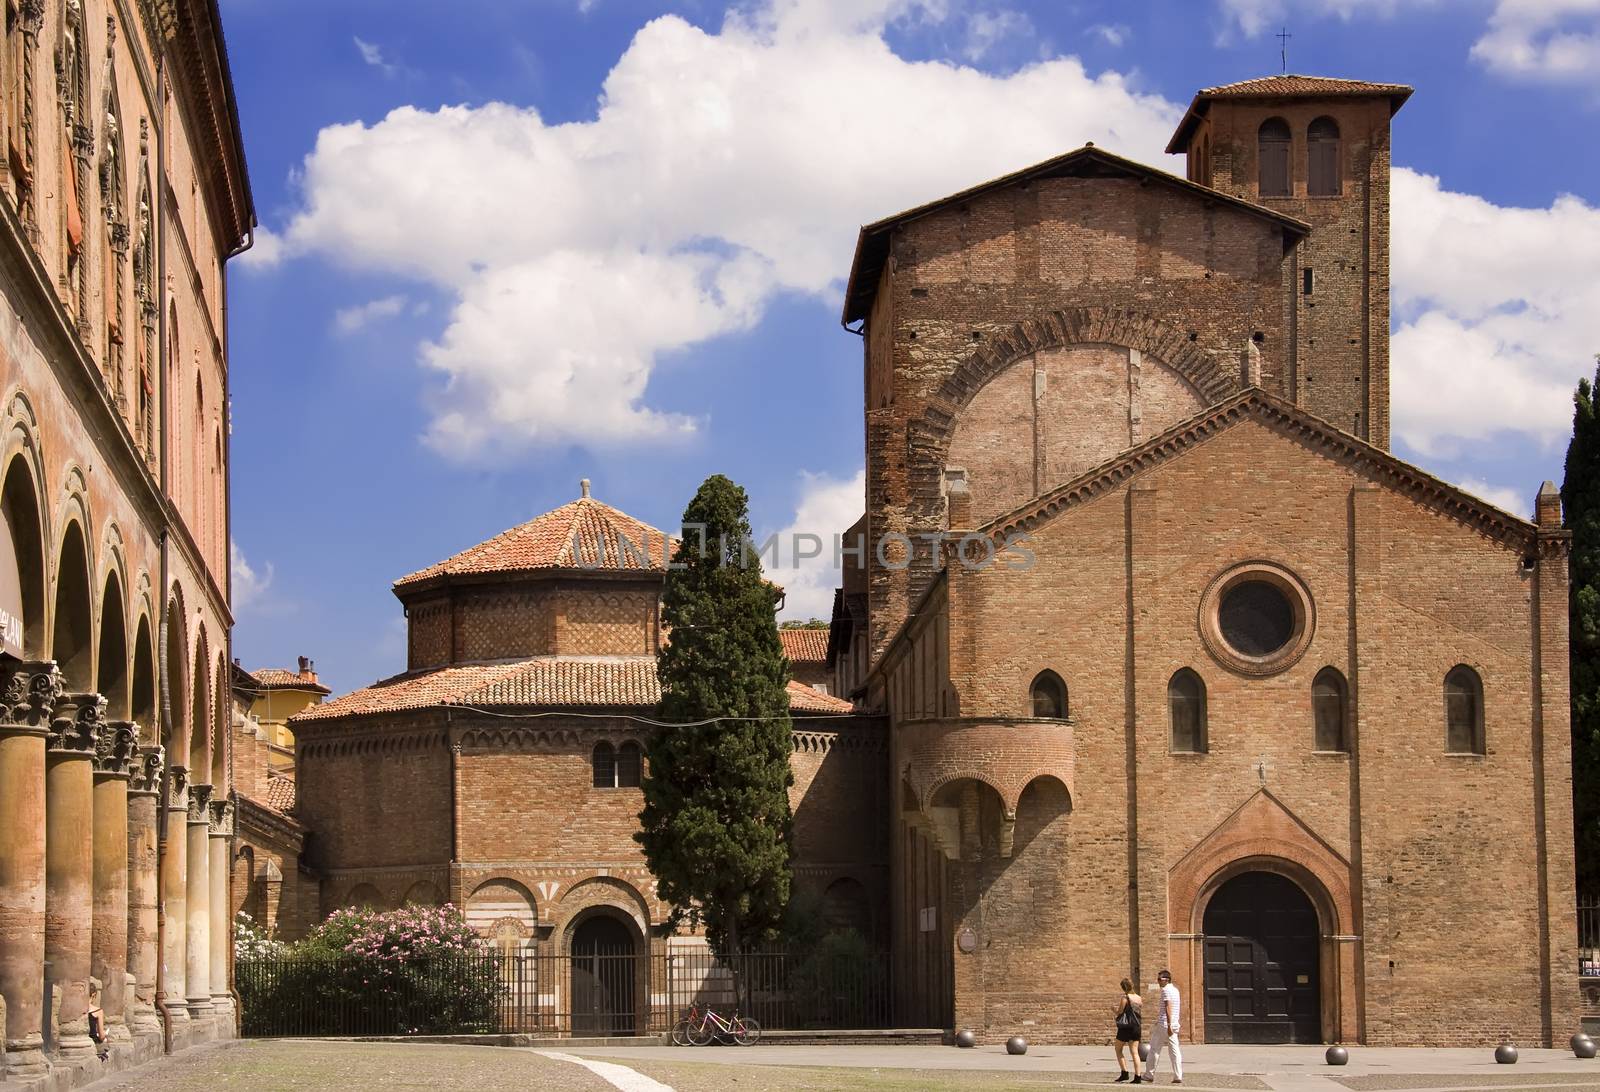 Facade of medieval church and monastery in Bologna, Italy